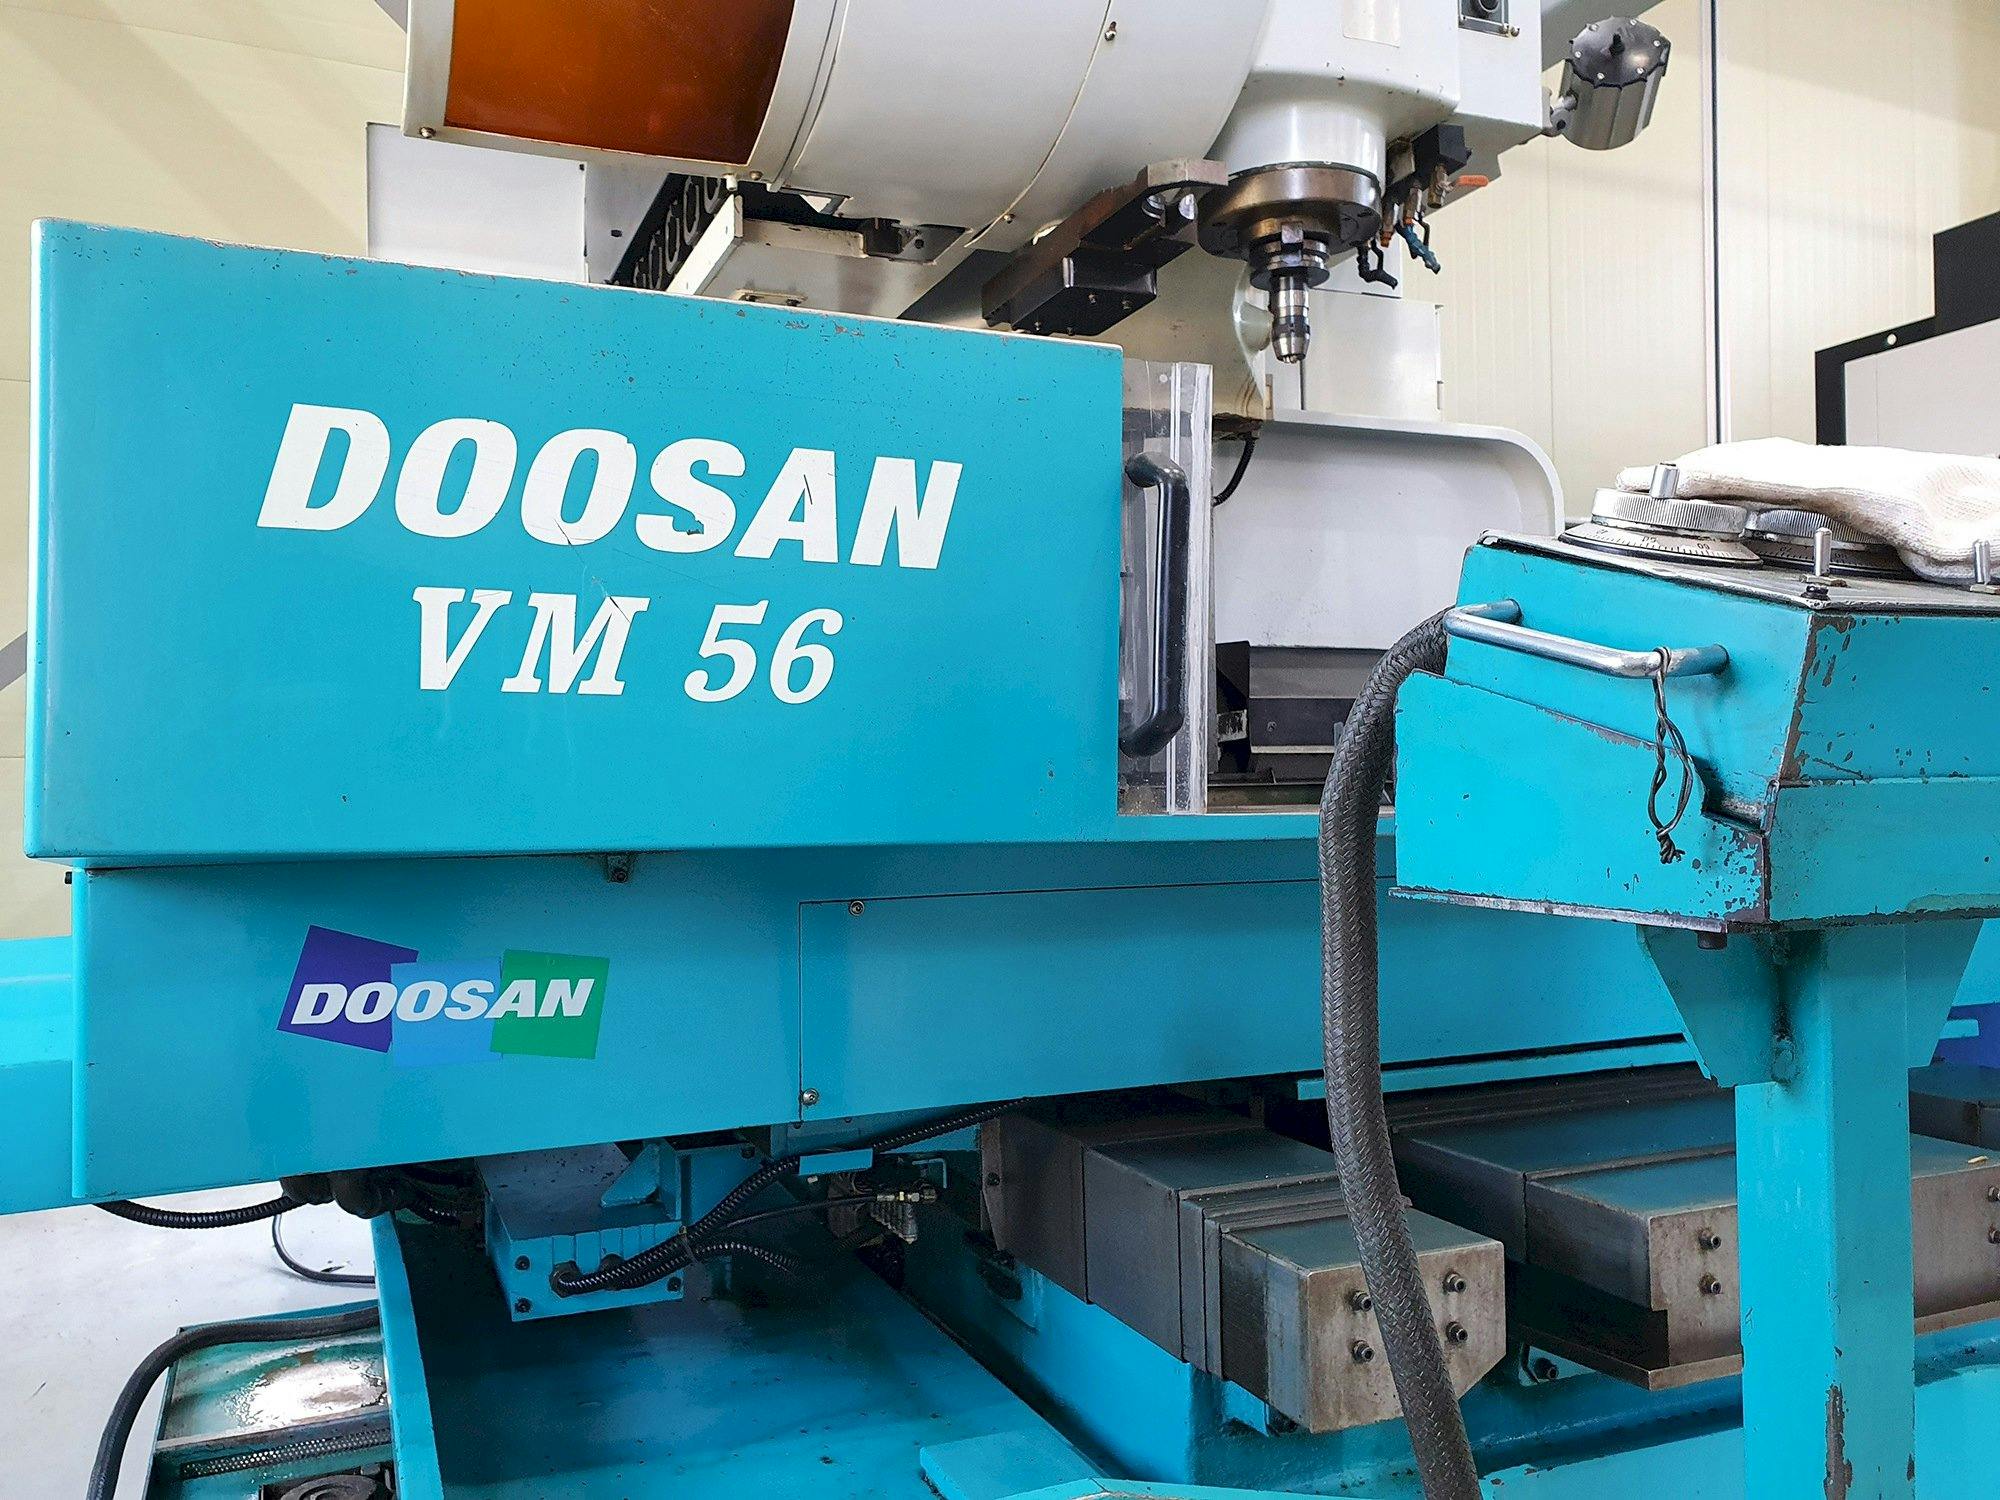 Front view of Doosan VM56  machine